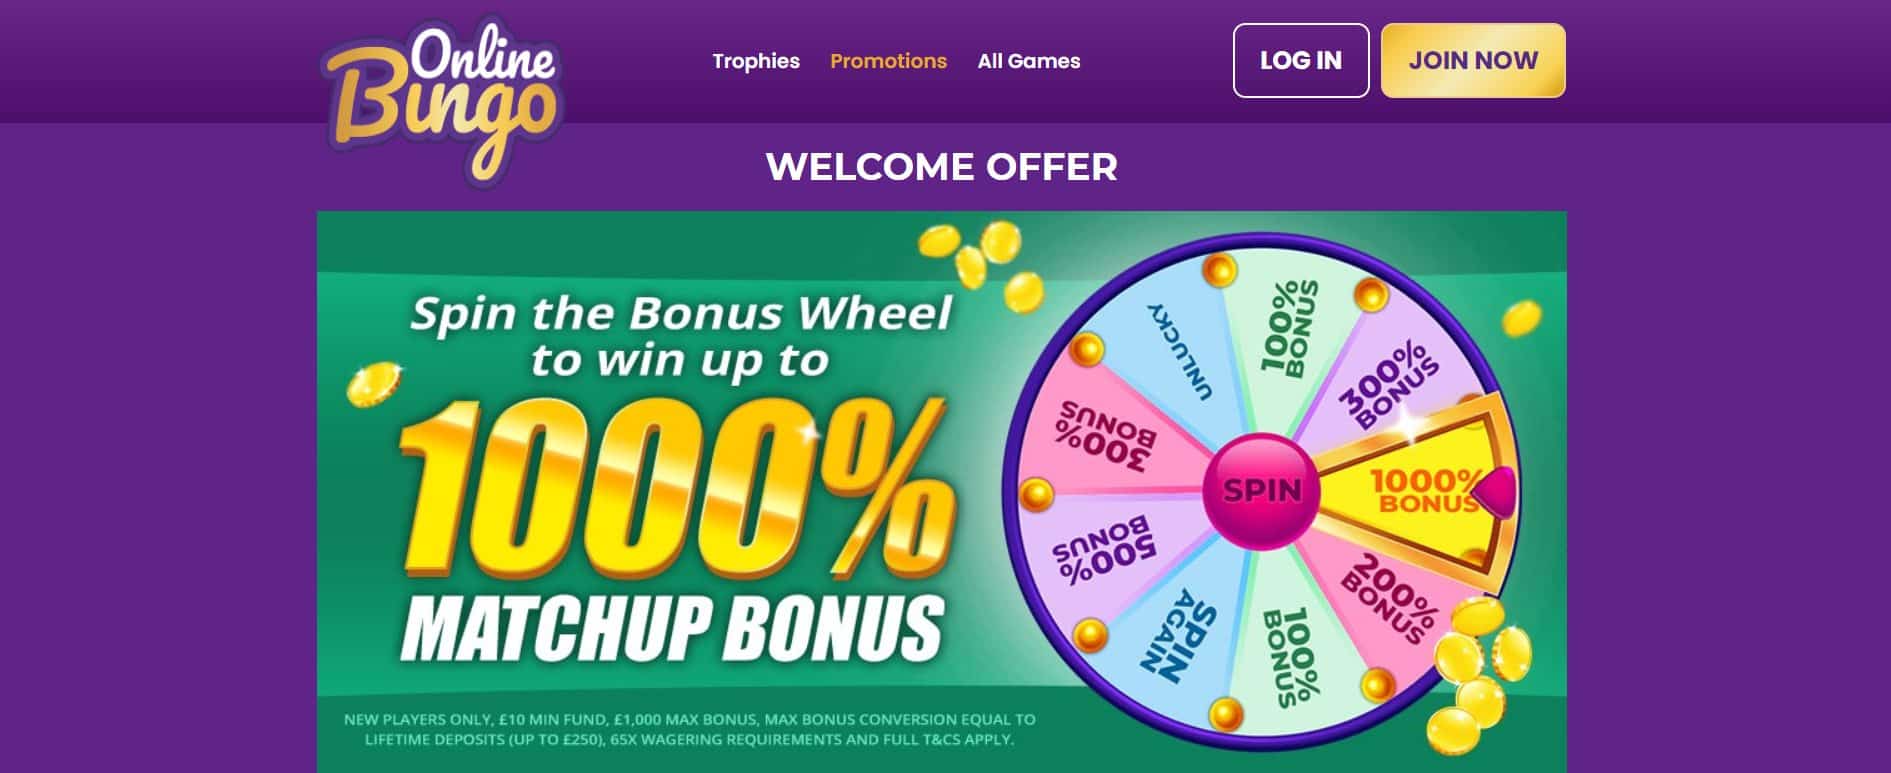 Online Bingo Casino review bonus offer